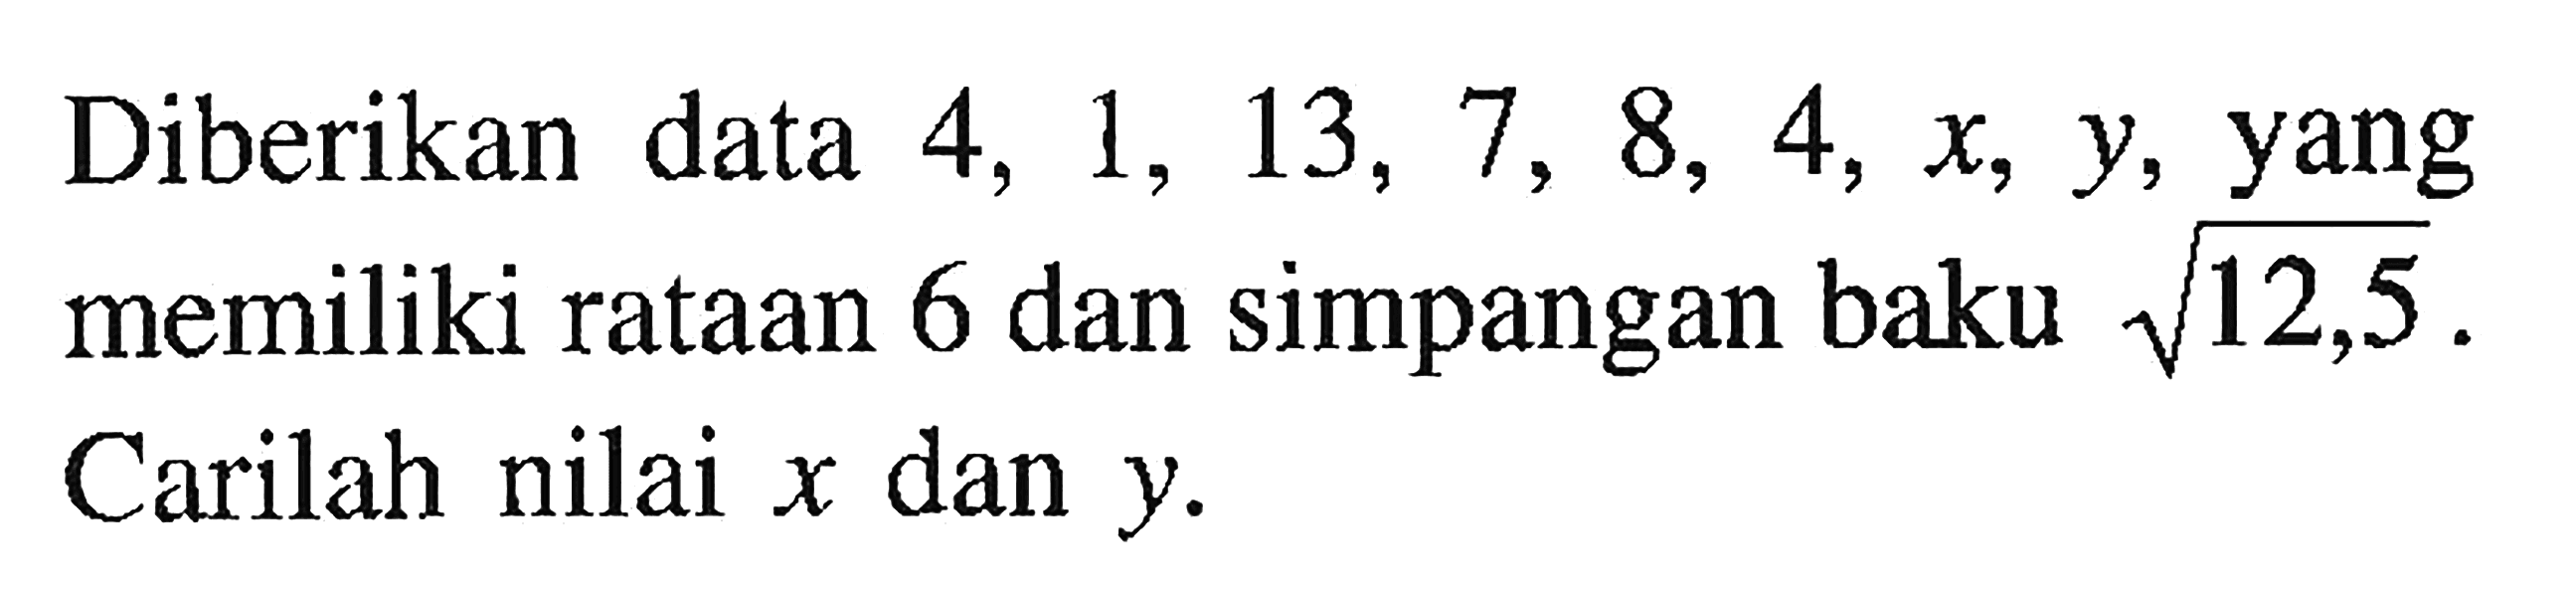 Diberikan data 4,1,13,7,8,4,x,y, yang memiliki rataan 6 dan simpangan baku akar(12,5). Carilah nilai x dan y.